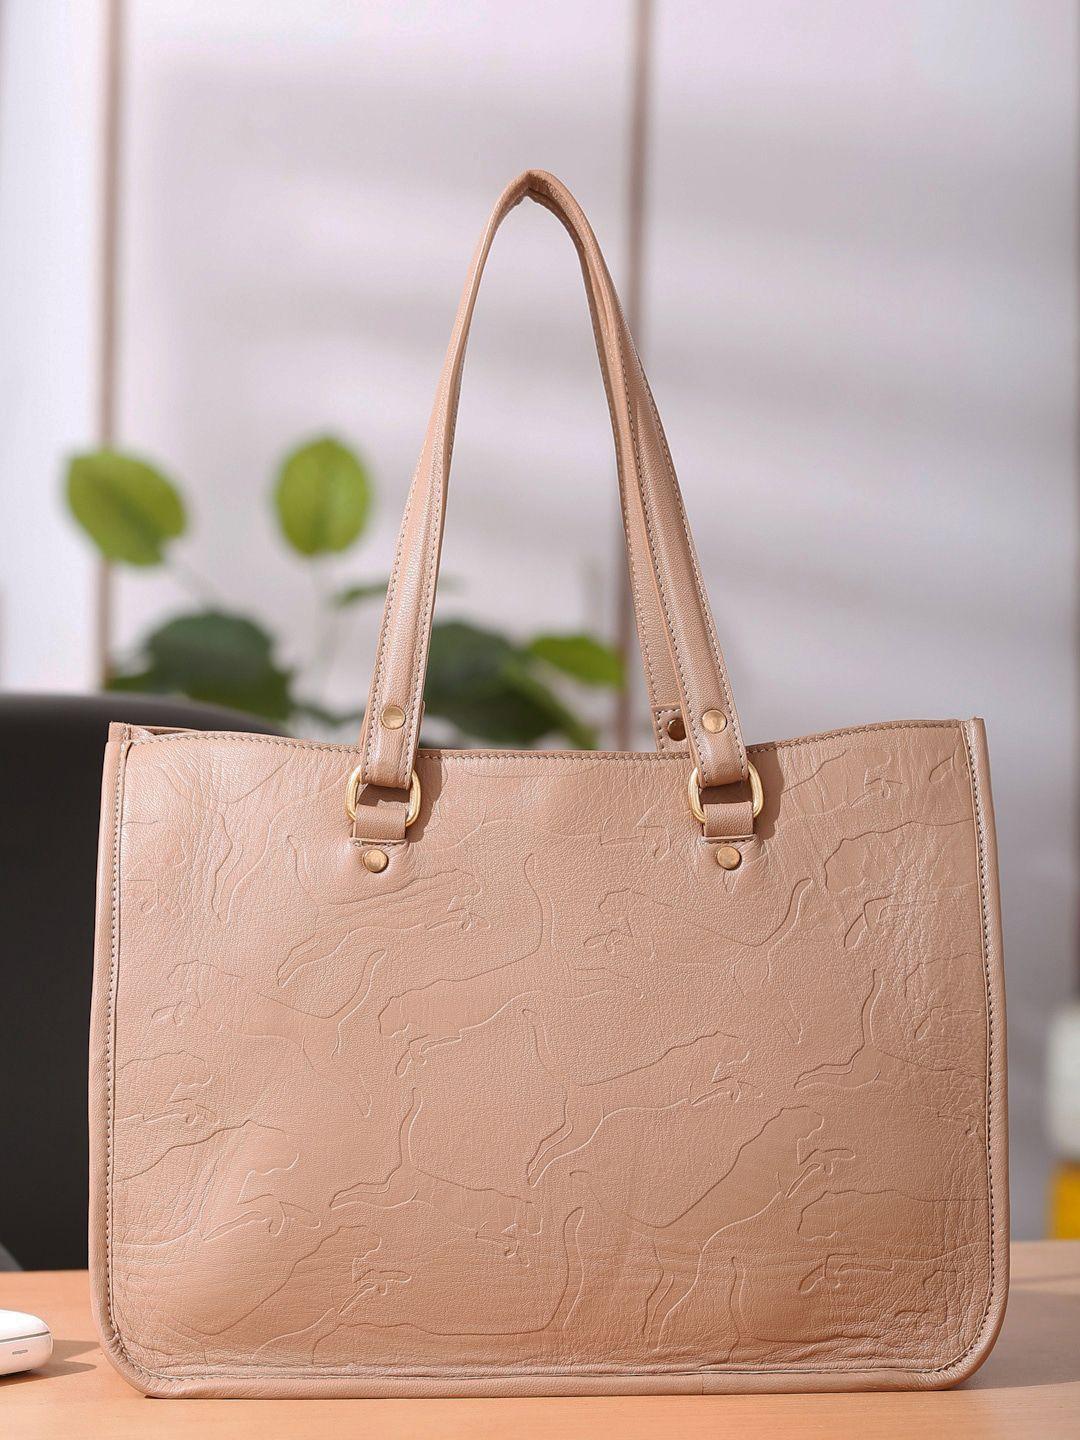 suvaska leather oversized structured handheld bag